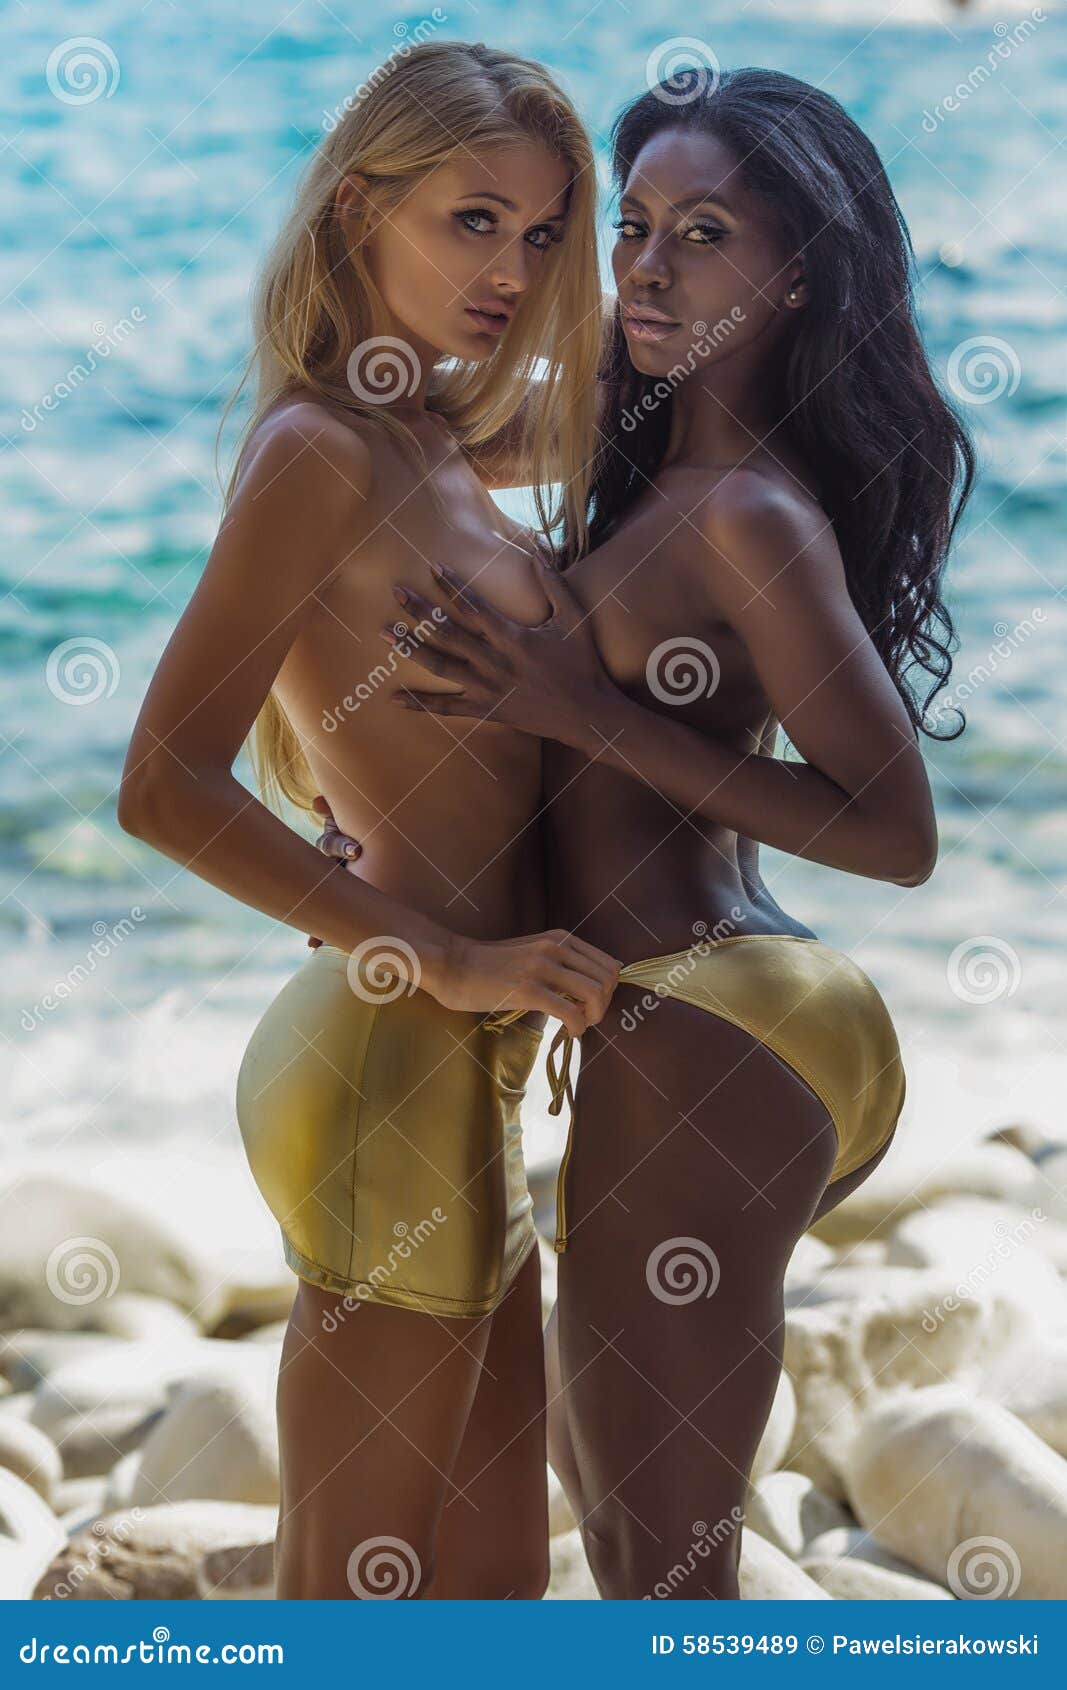 Nude Chicks At Beach gratifying tmb